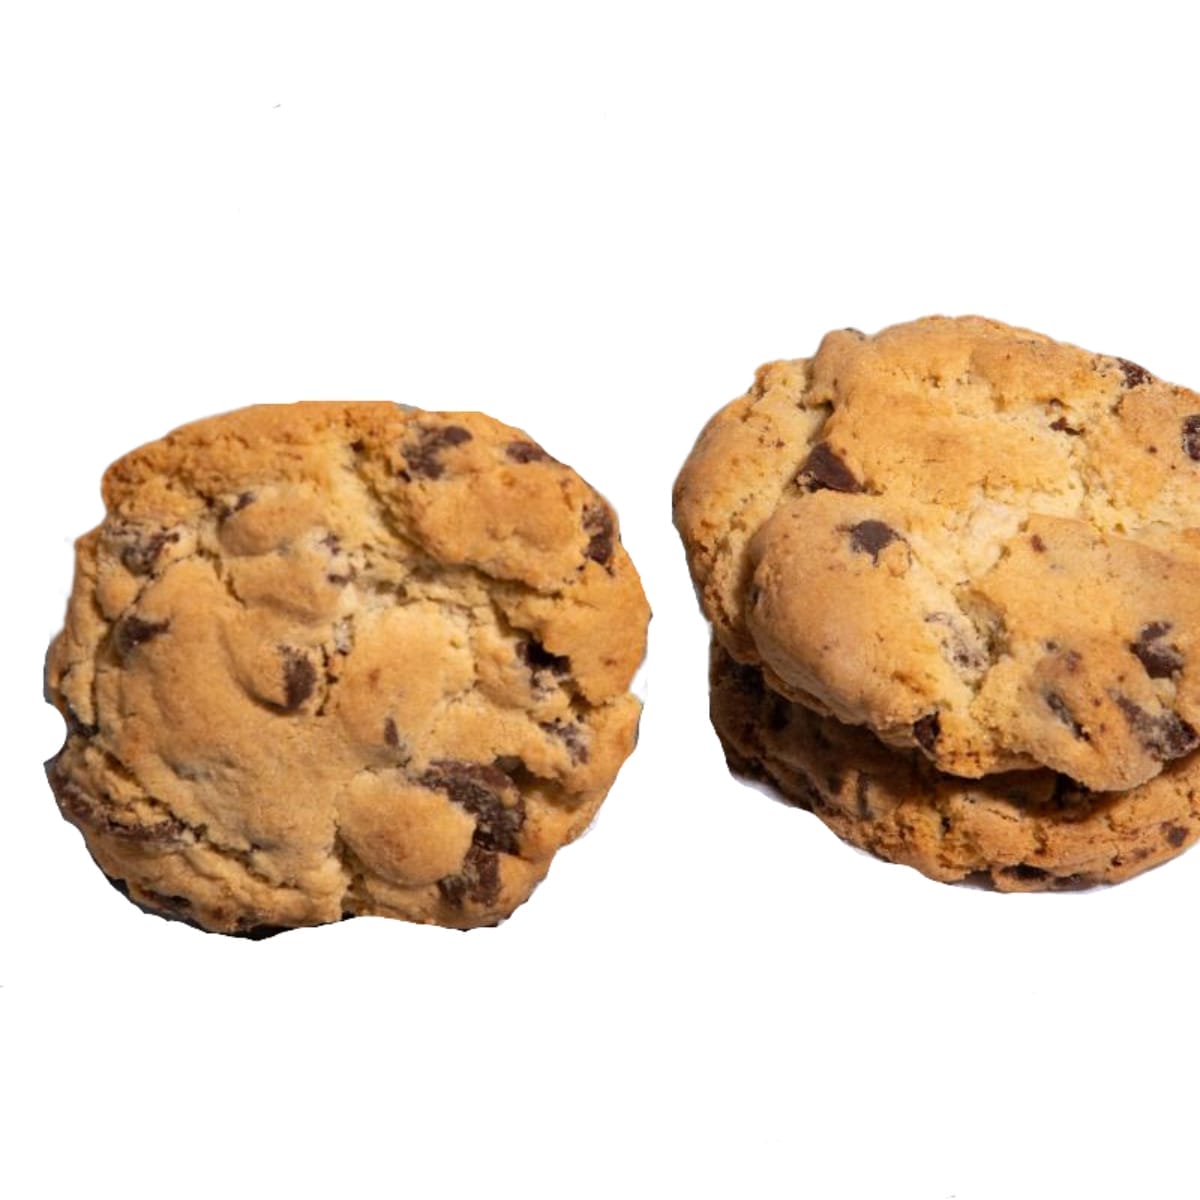 GHC x Sugar Shane 50mg Delta 9 Cookies - Chocolate Chip